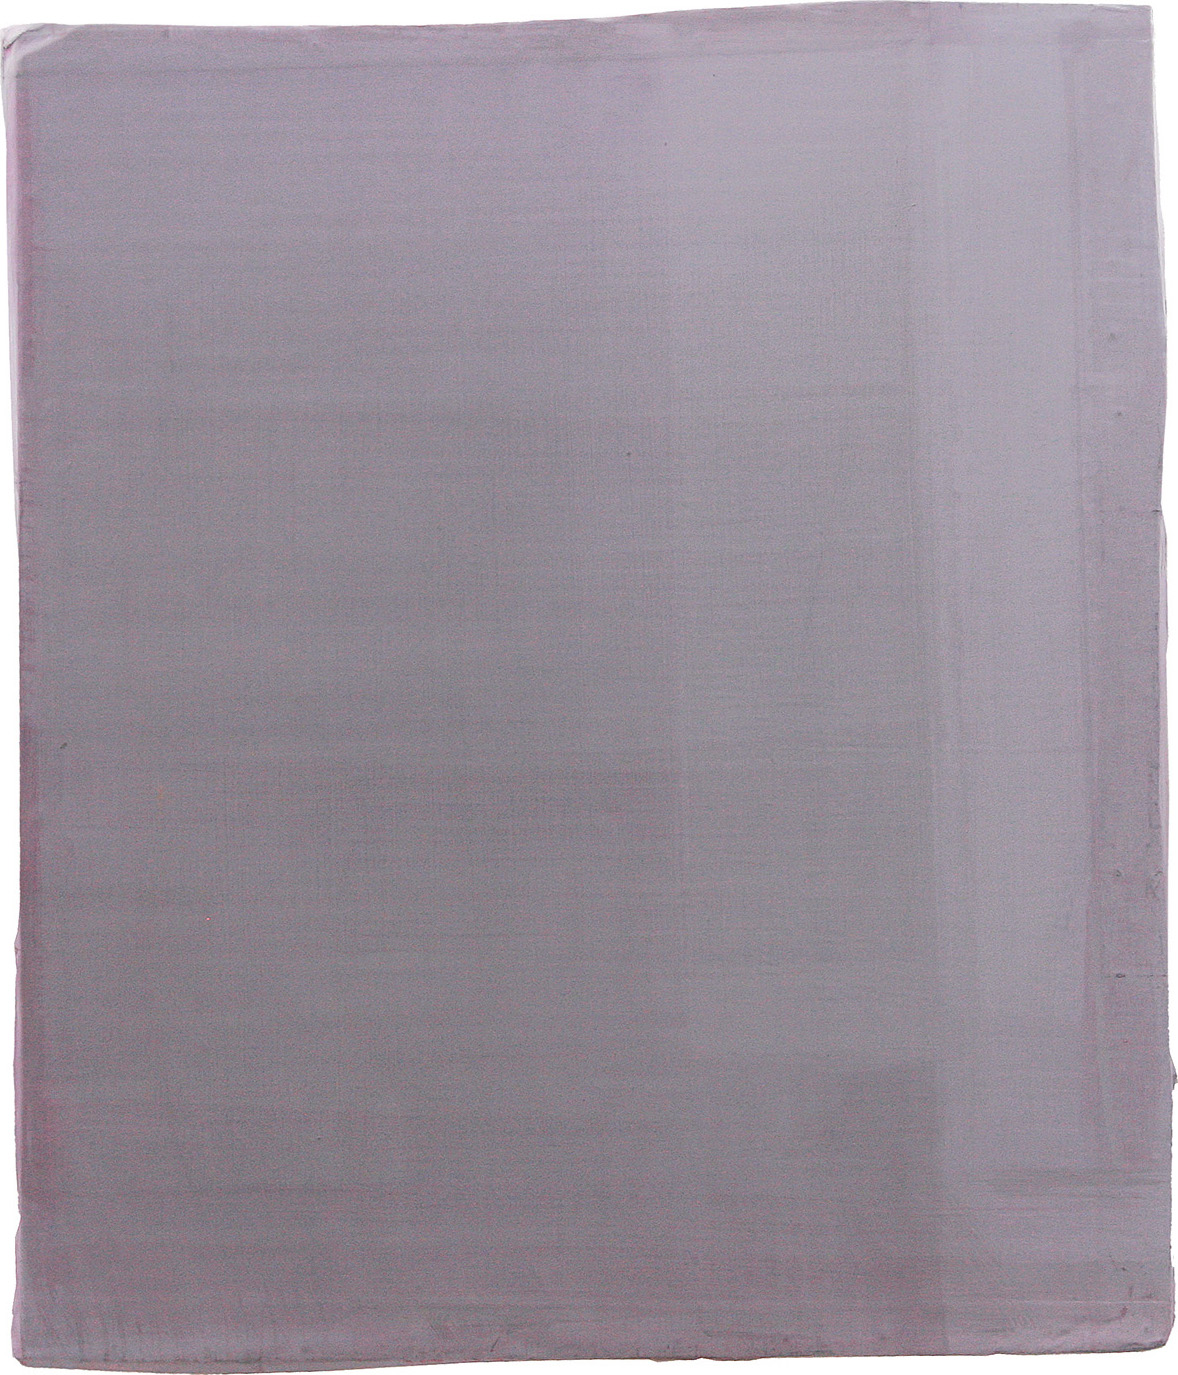 Raumort, 2010/201361,5 x 52 cmDispersion, ink grounded on MDF, framed